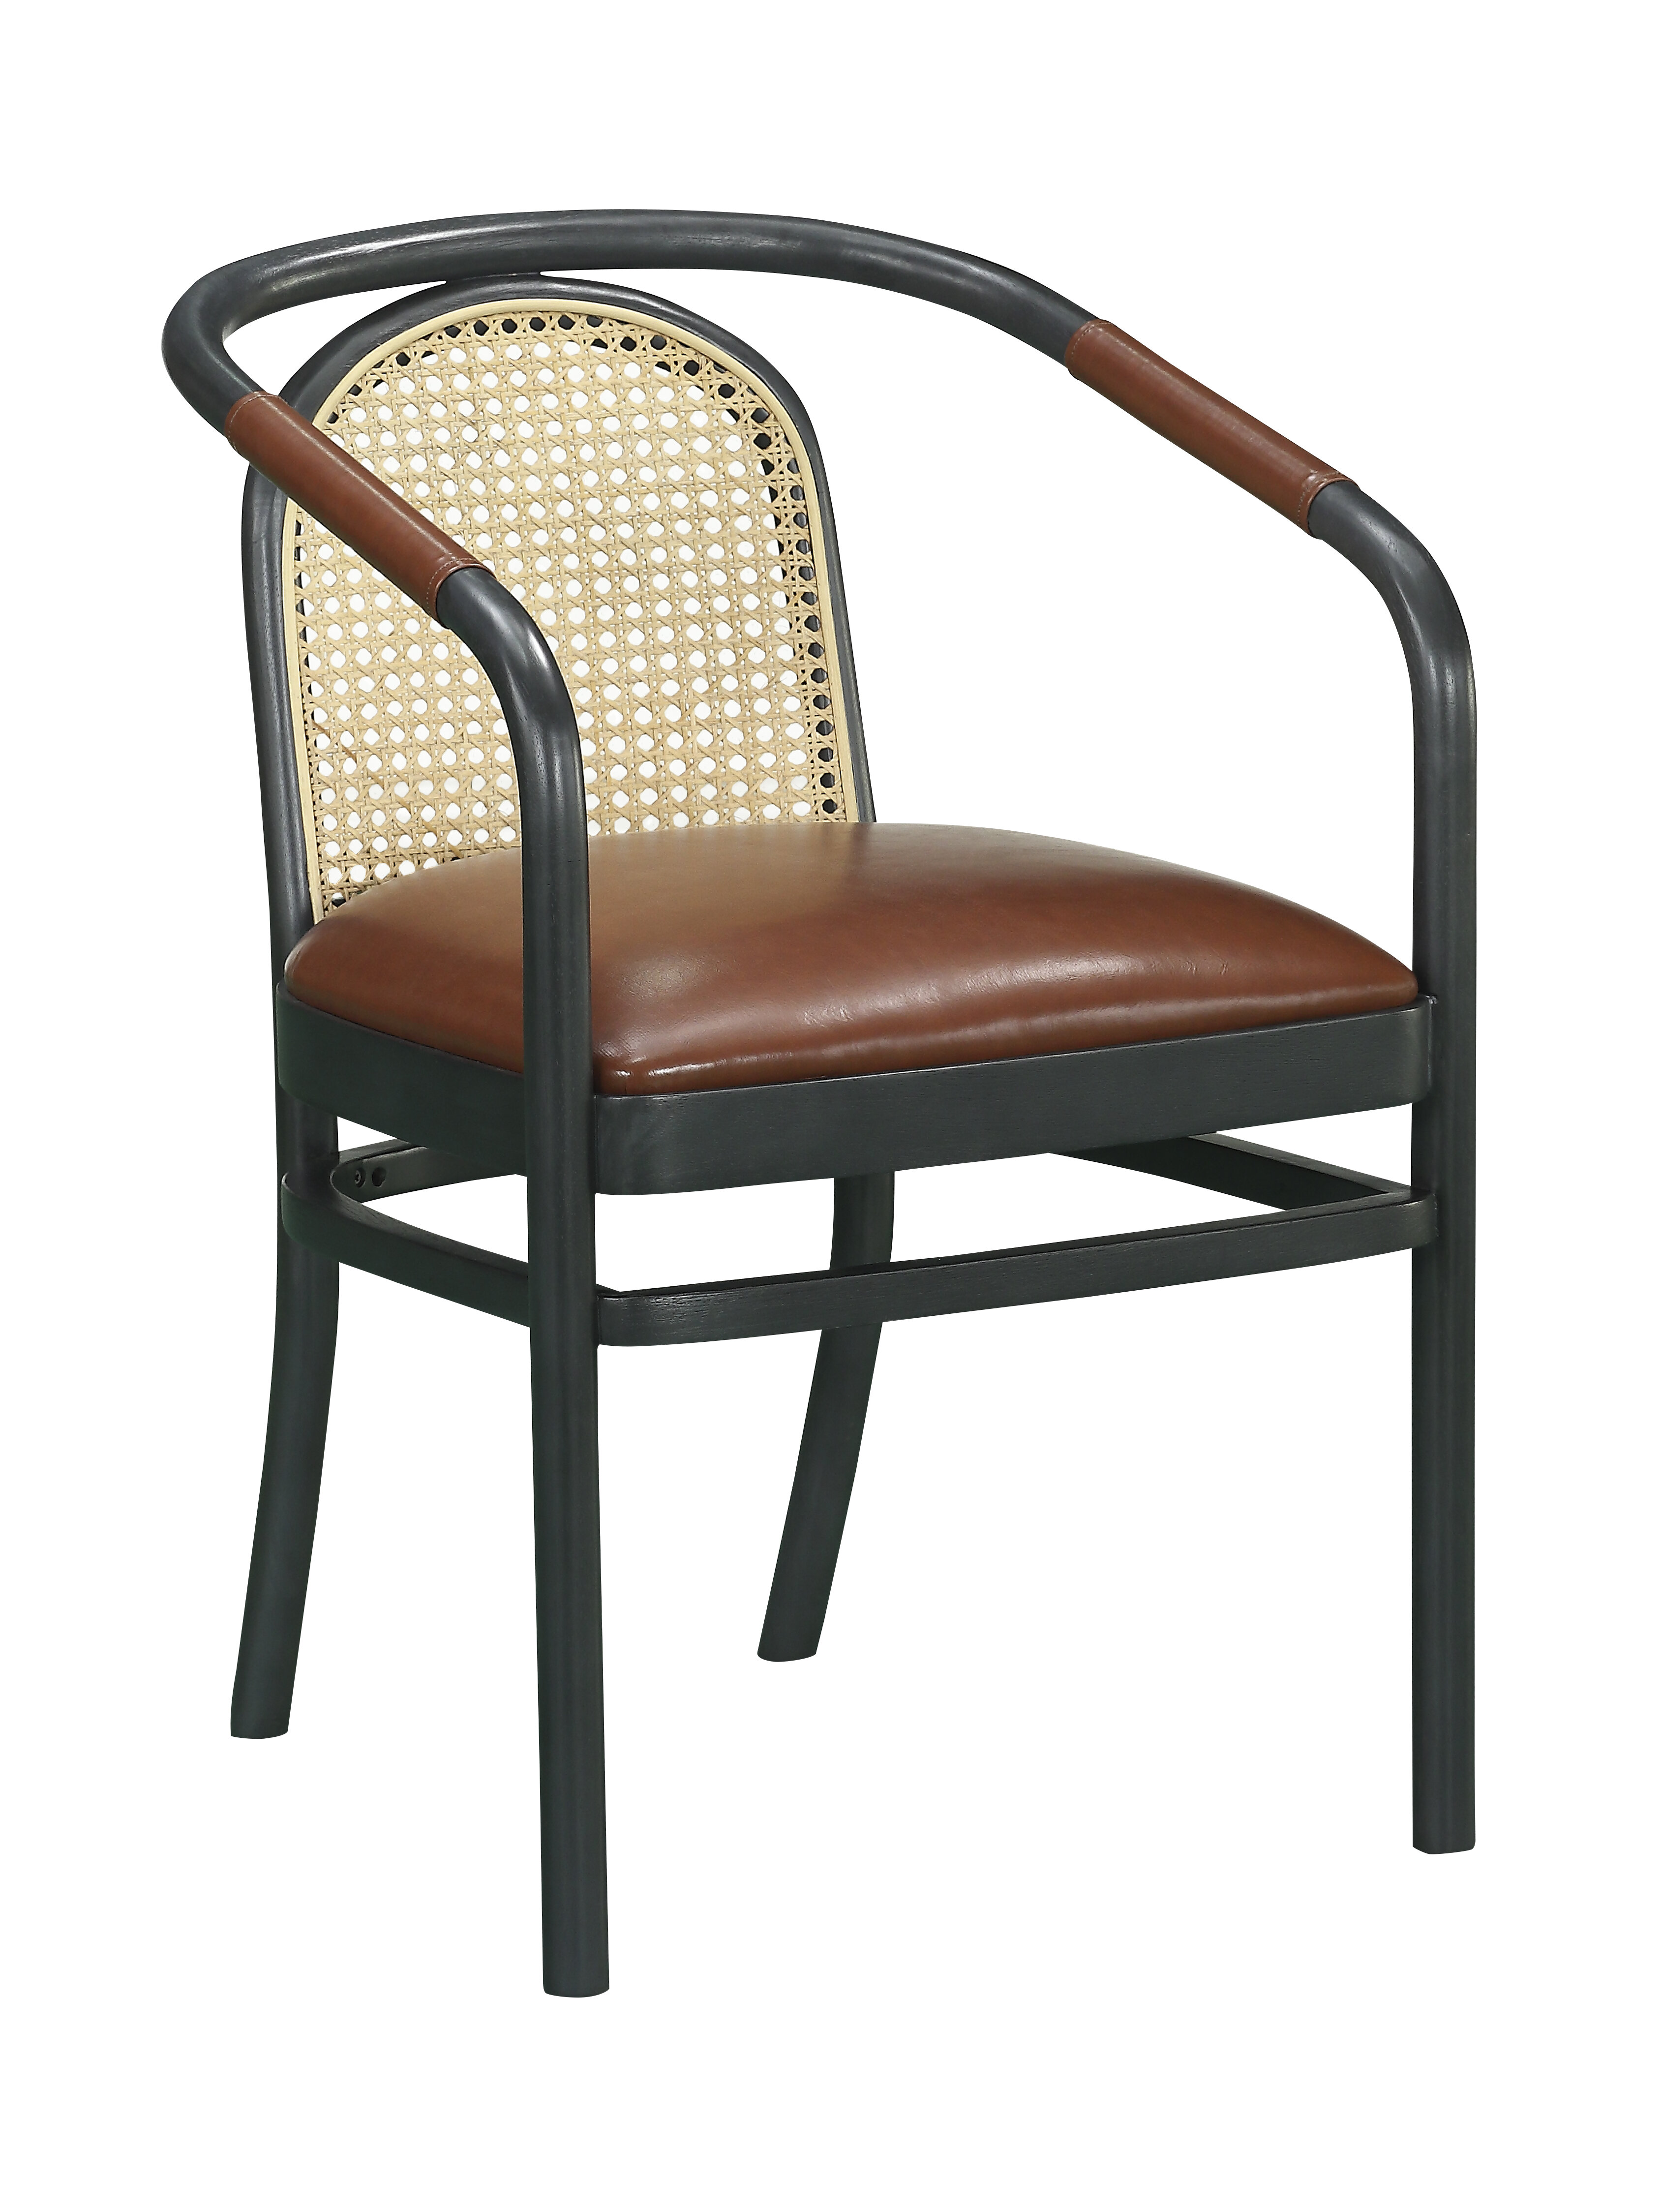 Bobby Berk A R T Furniture Bobby Berk Moller Arm Chair By